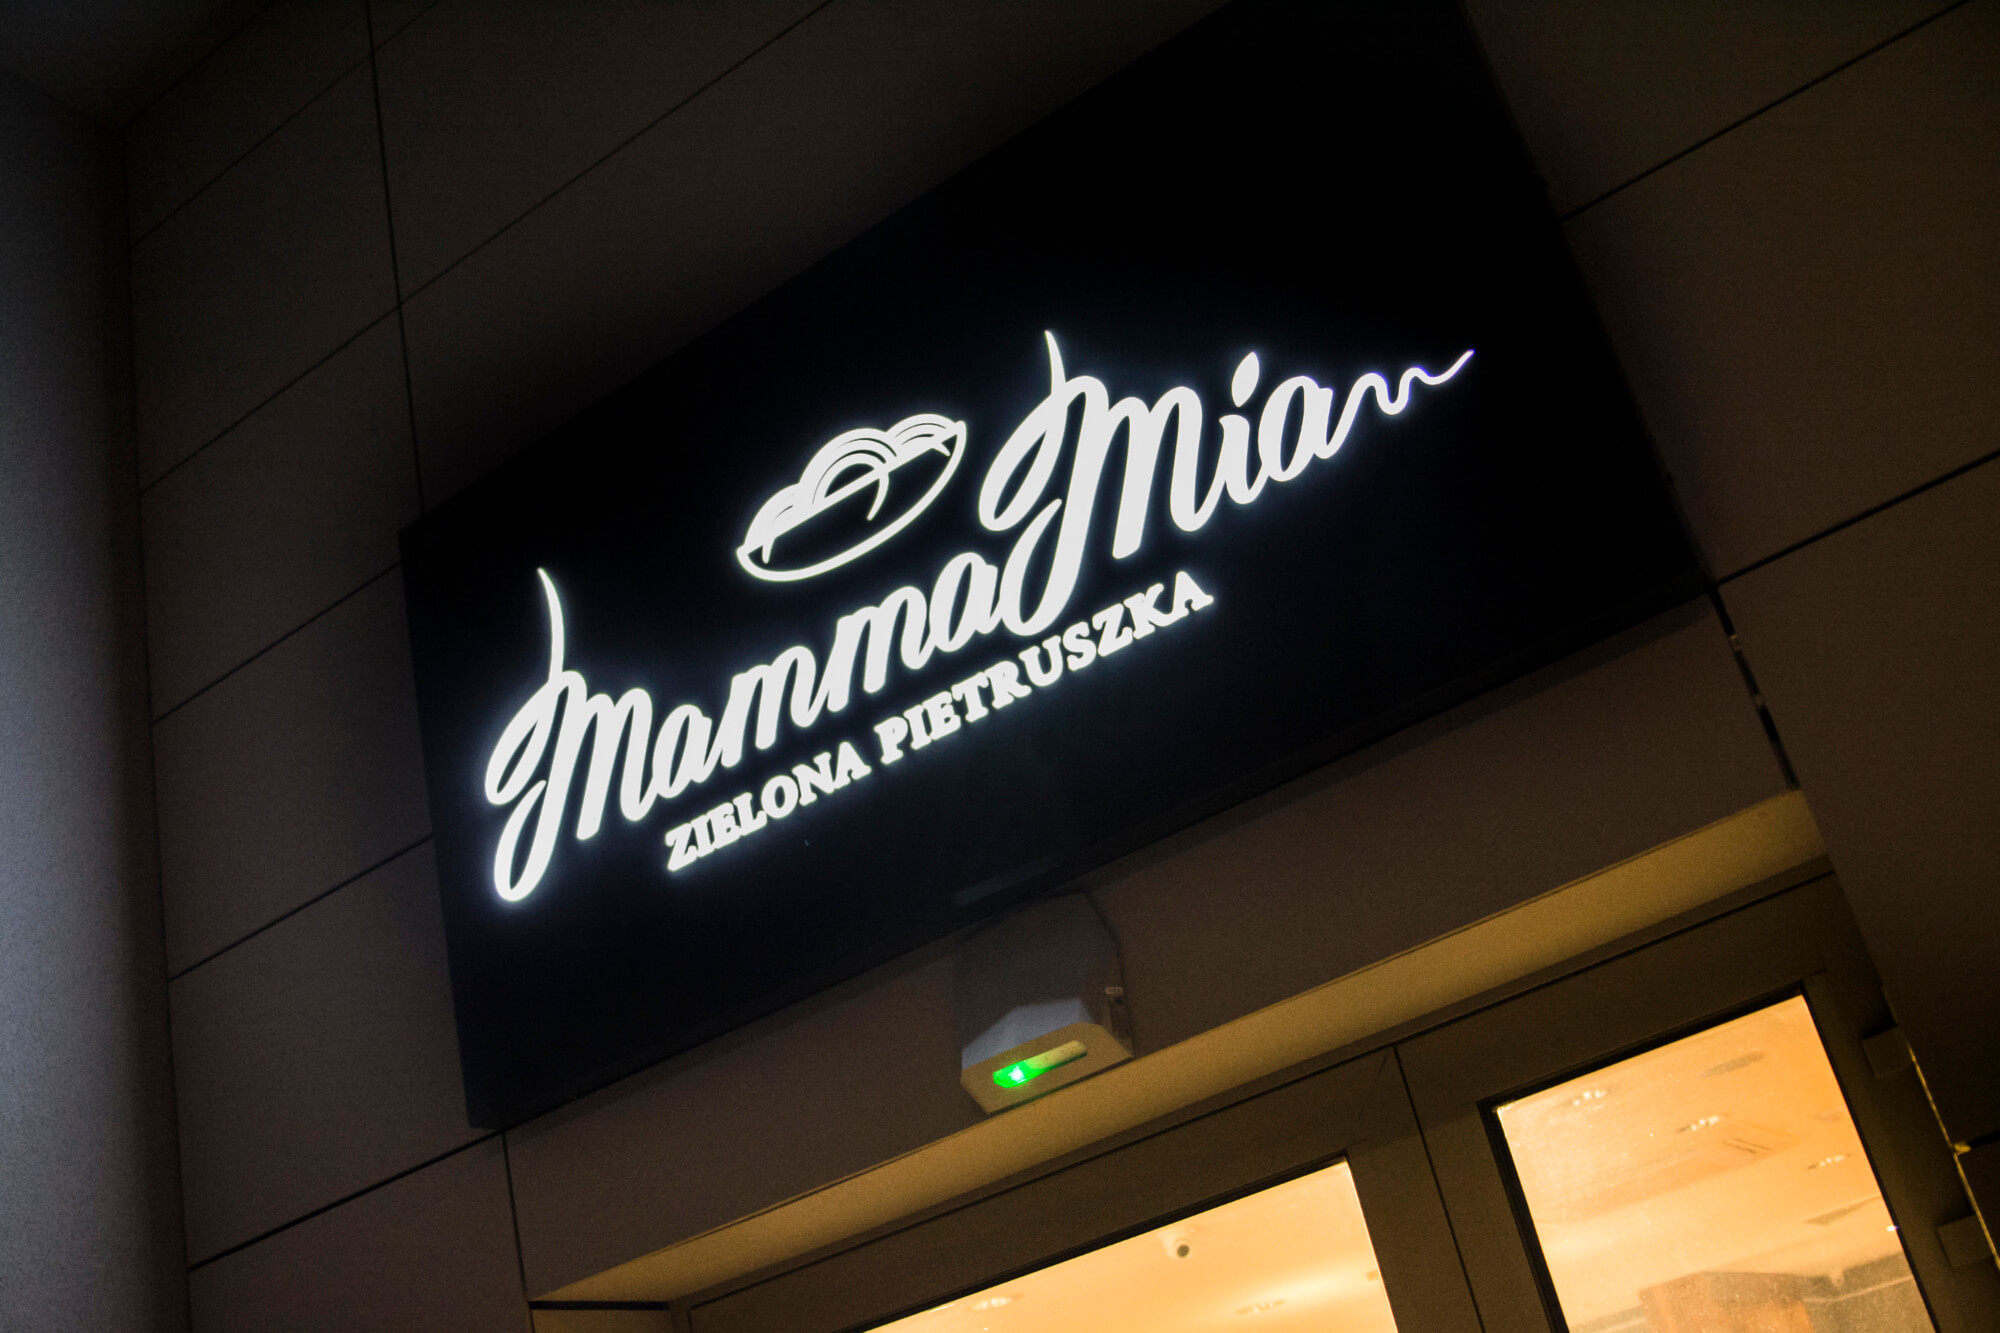 Mamma Mia - Mamma Mia - reclame lichtbak geplaatst boven de ingang